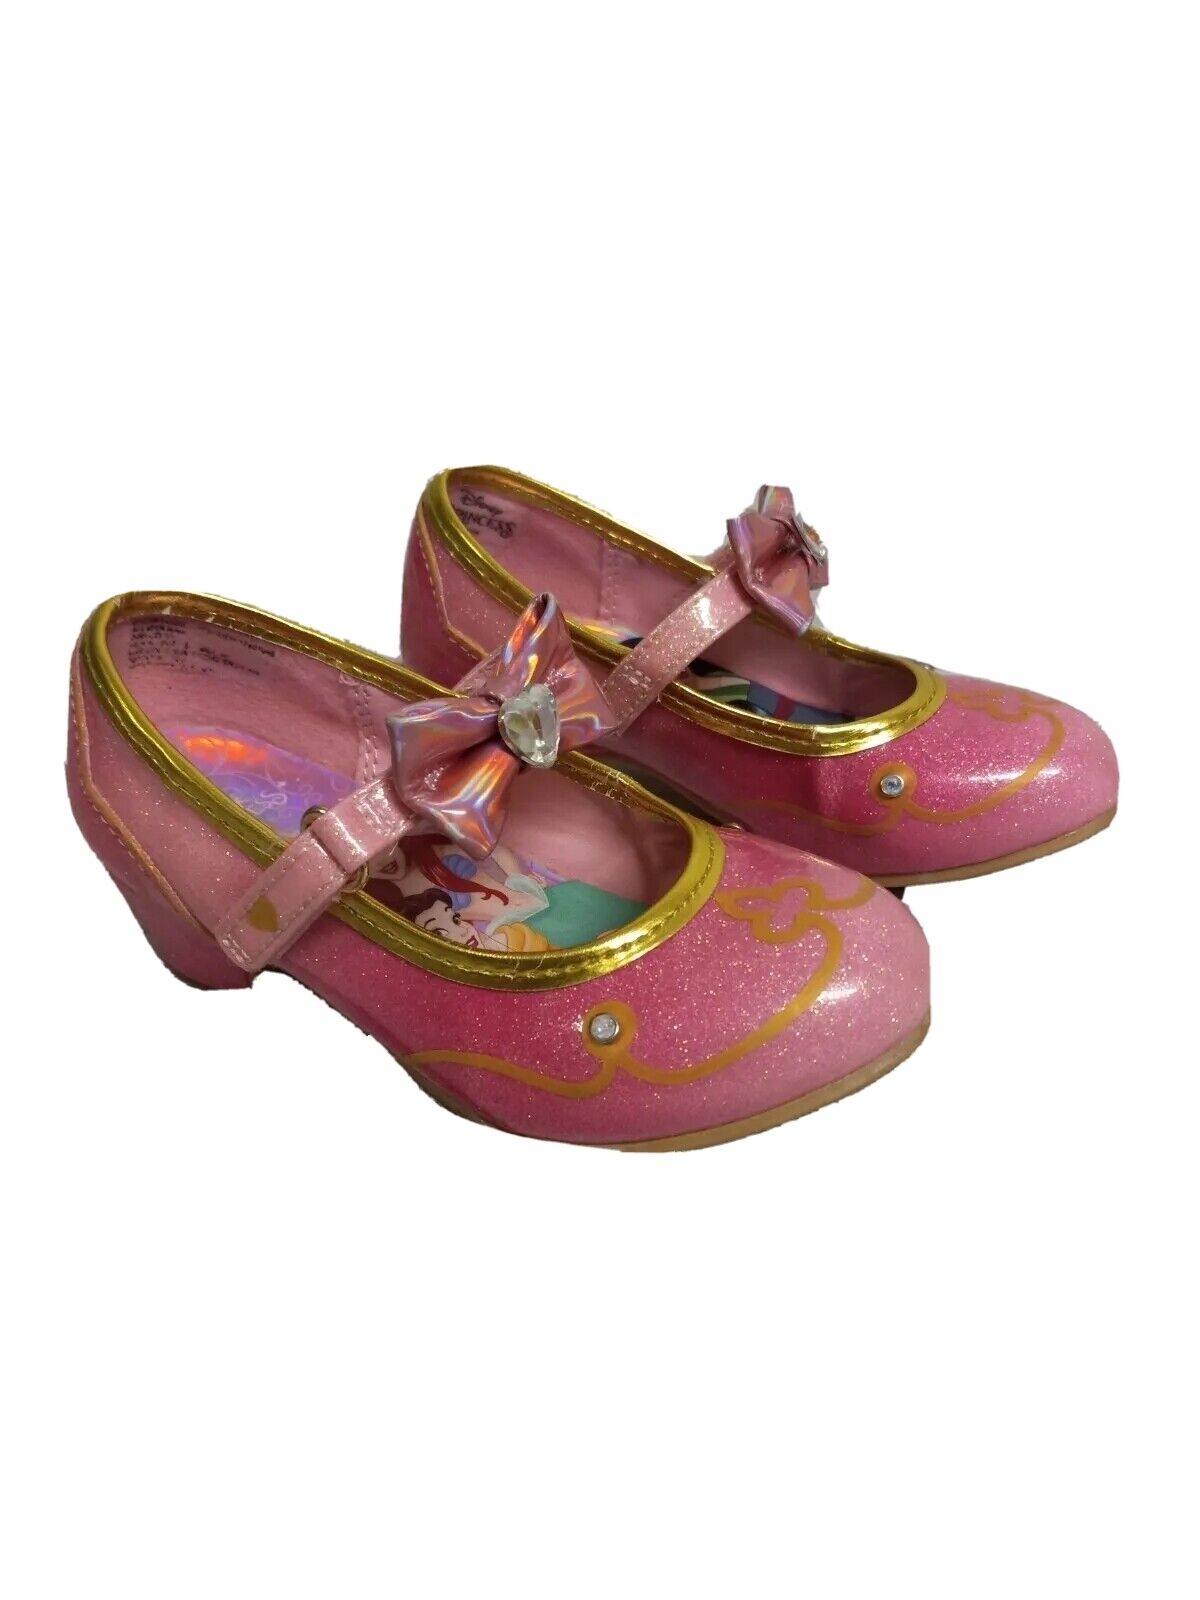 Disney Princess Pink Toddler Girls Shoes Heels Size 9 Dress Up